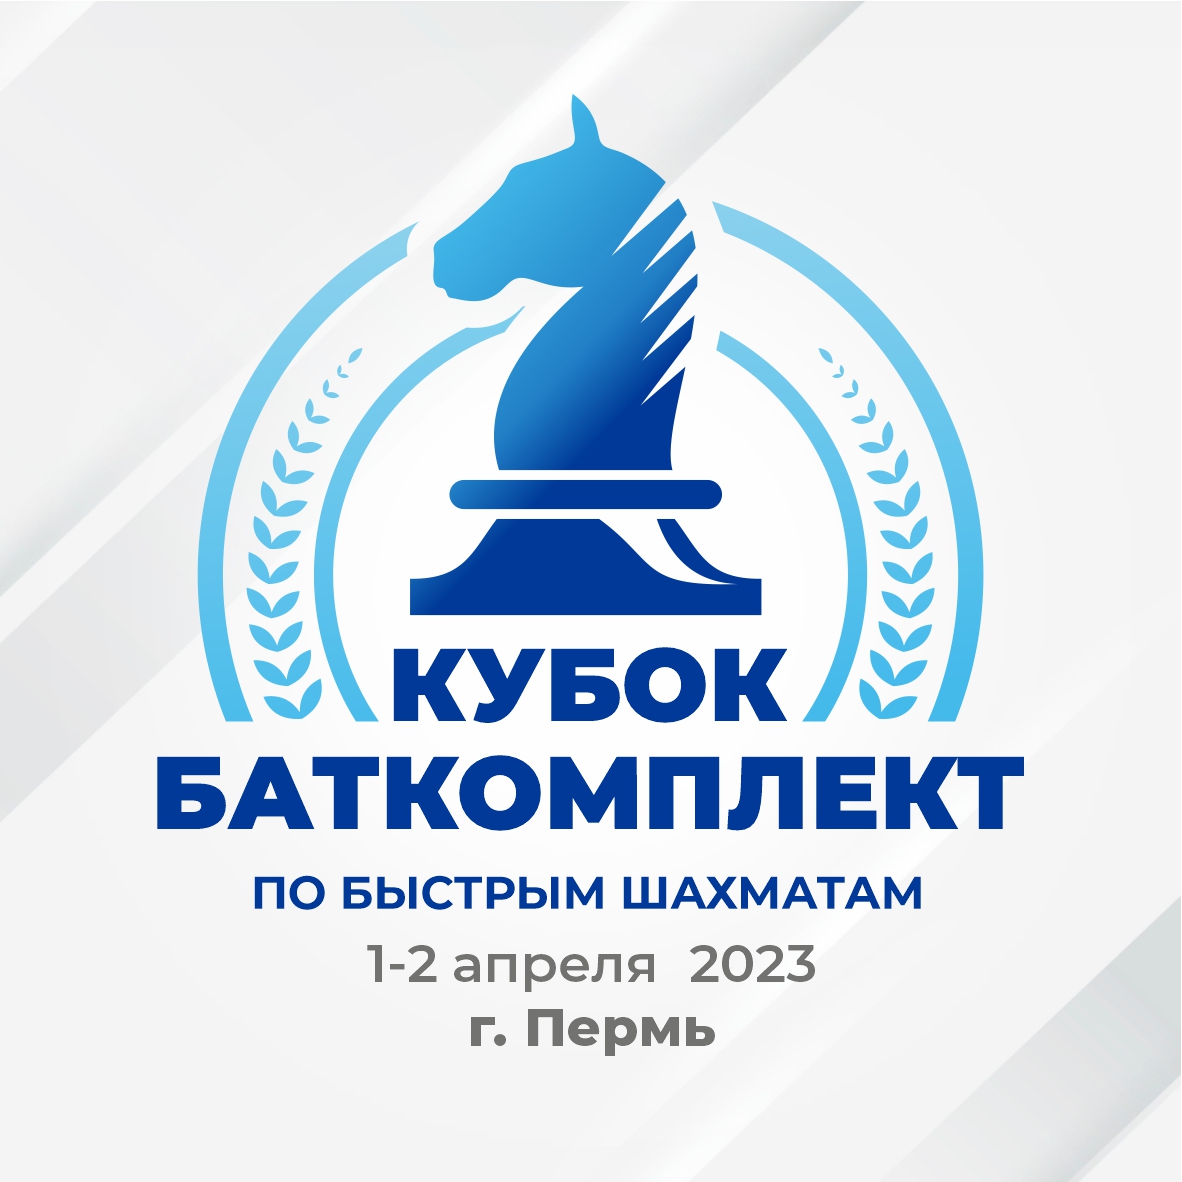 Первый турнир по быстрым шахматам "Кубок БАТКОМПЛЕКТ" 